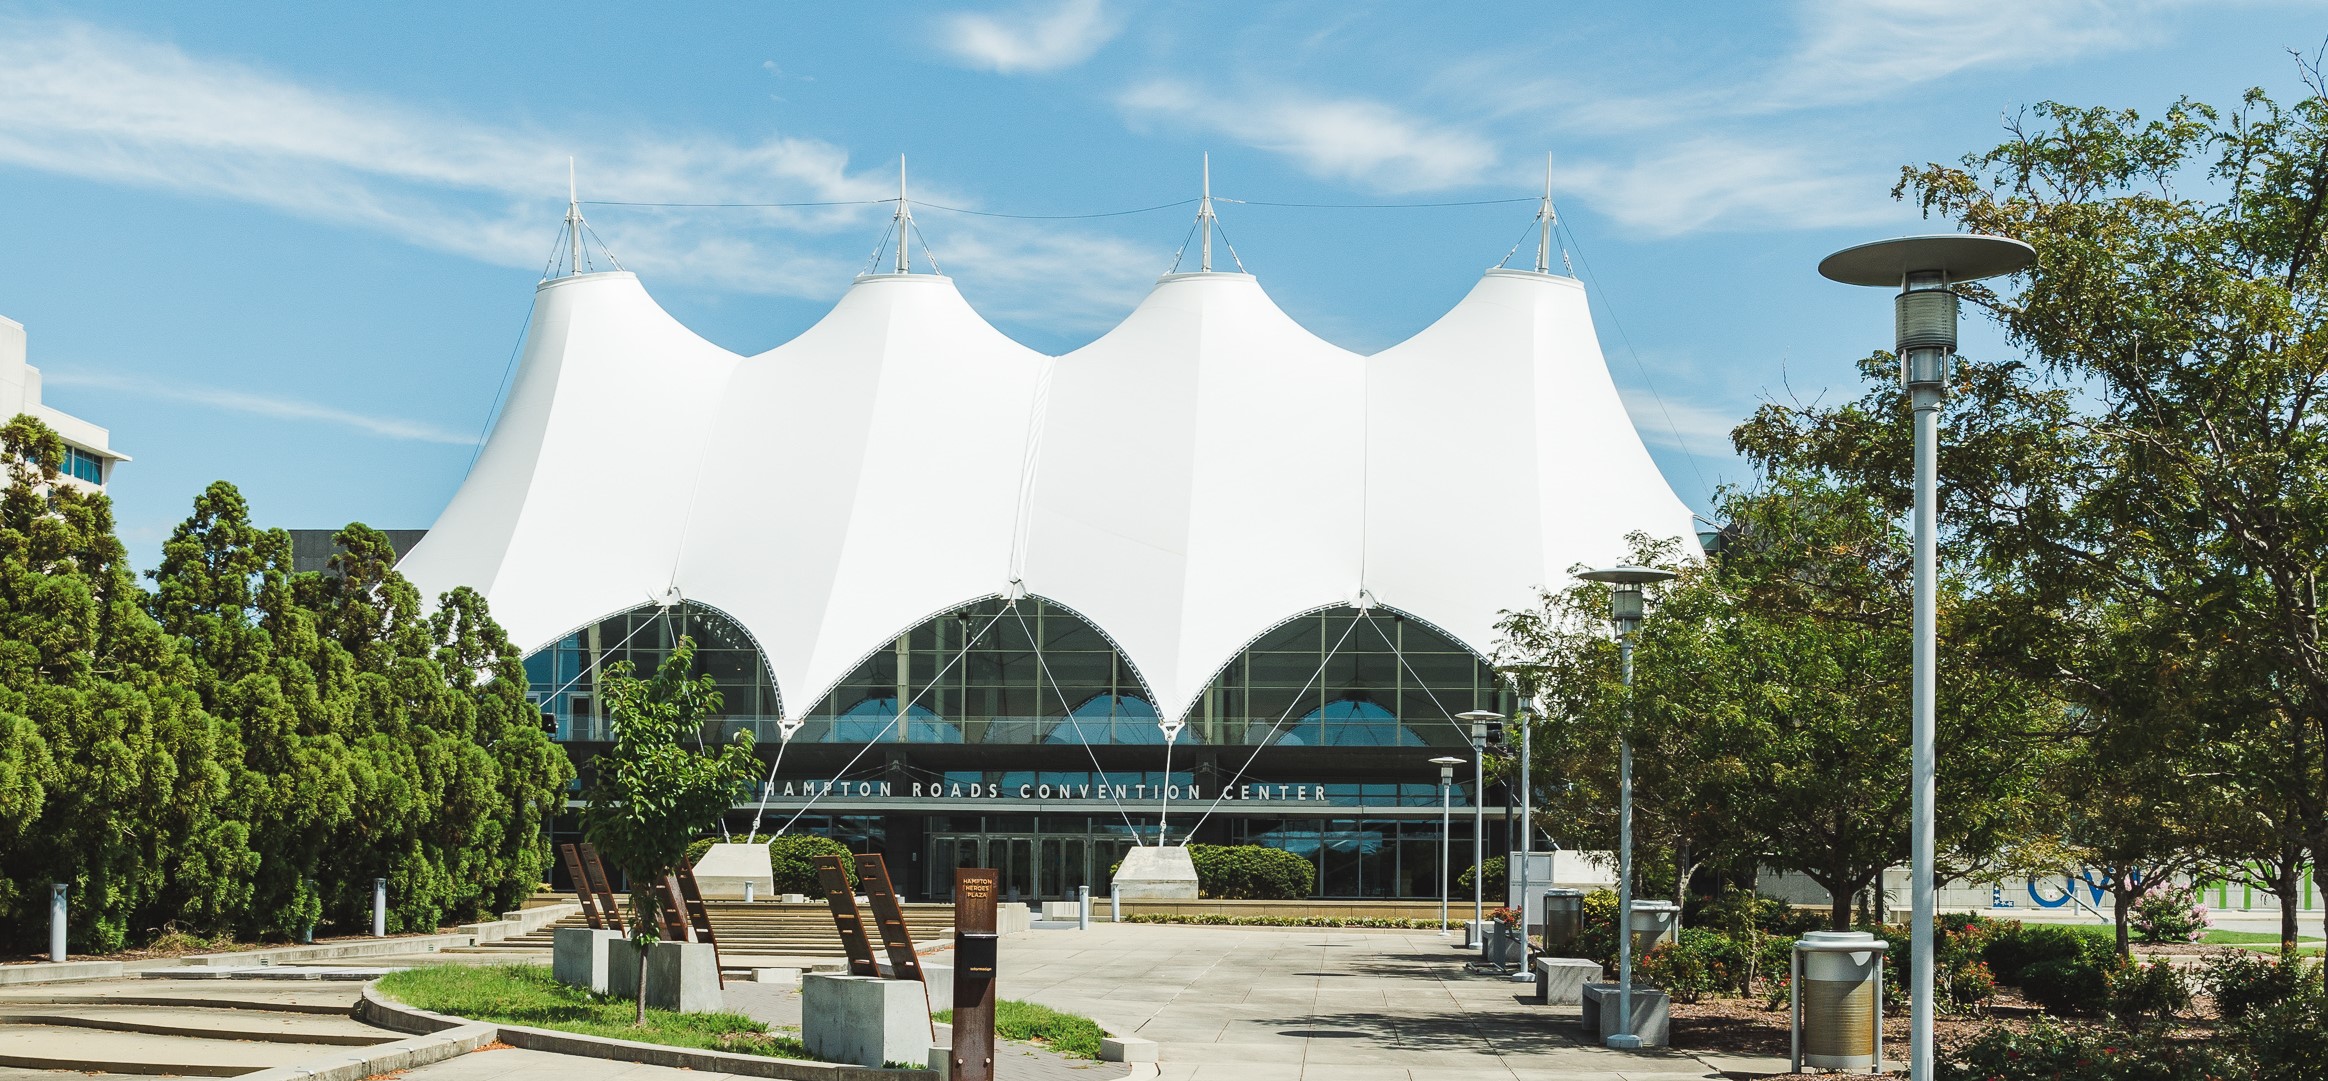 Hampton Roads Convention center